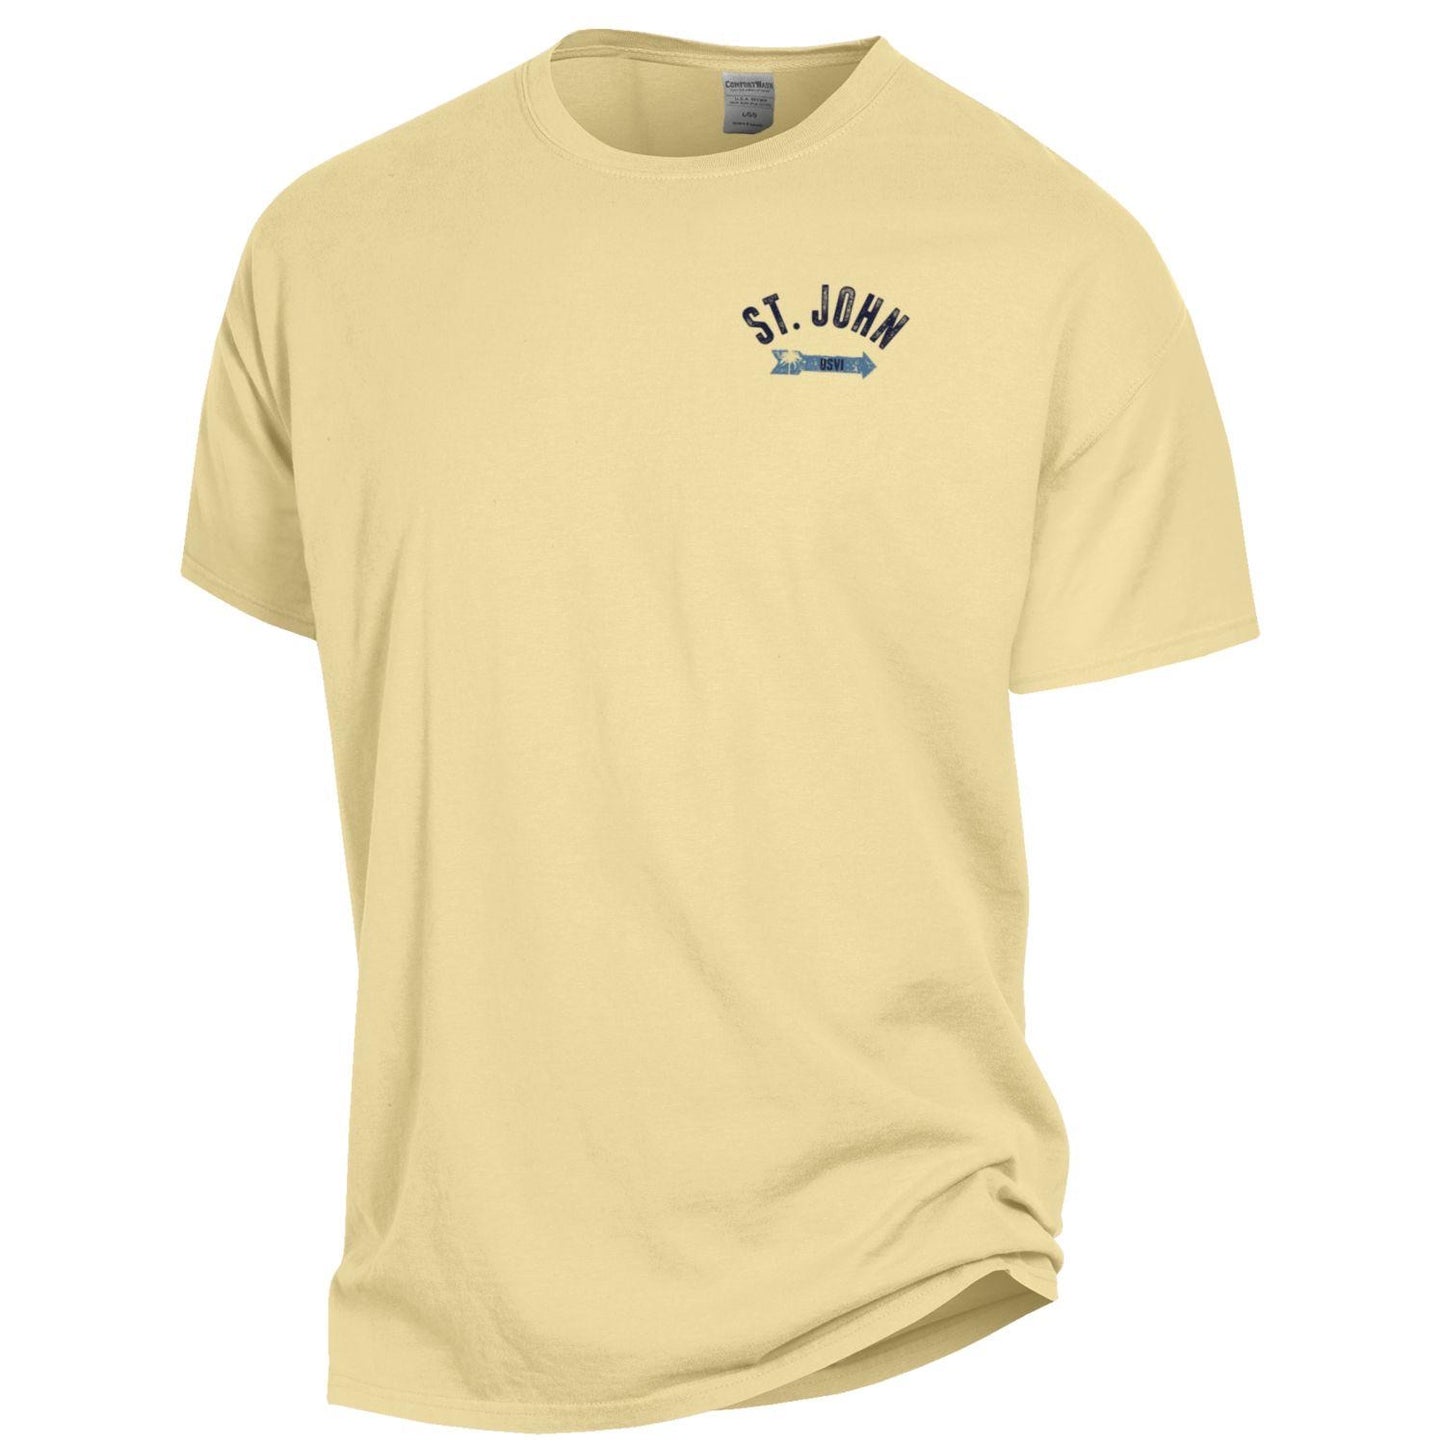 St. John Arrow Beach T-Shirt